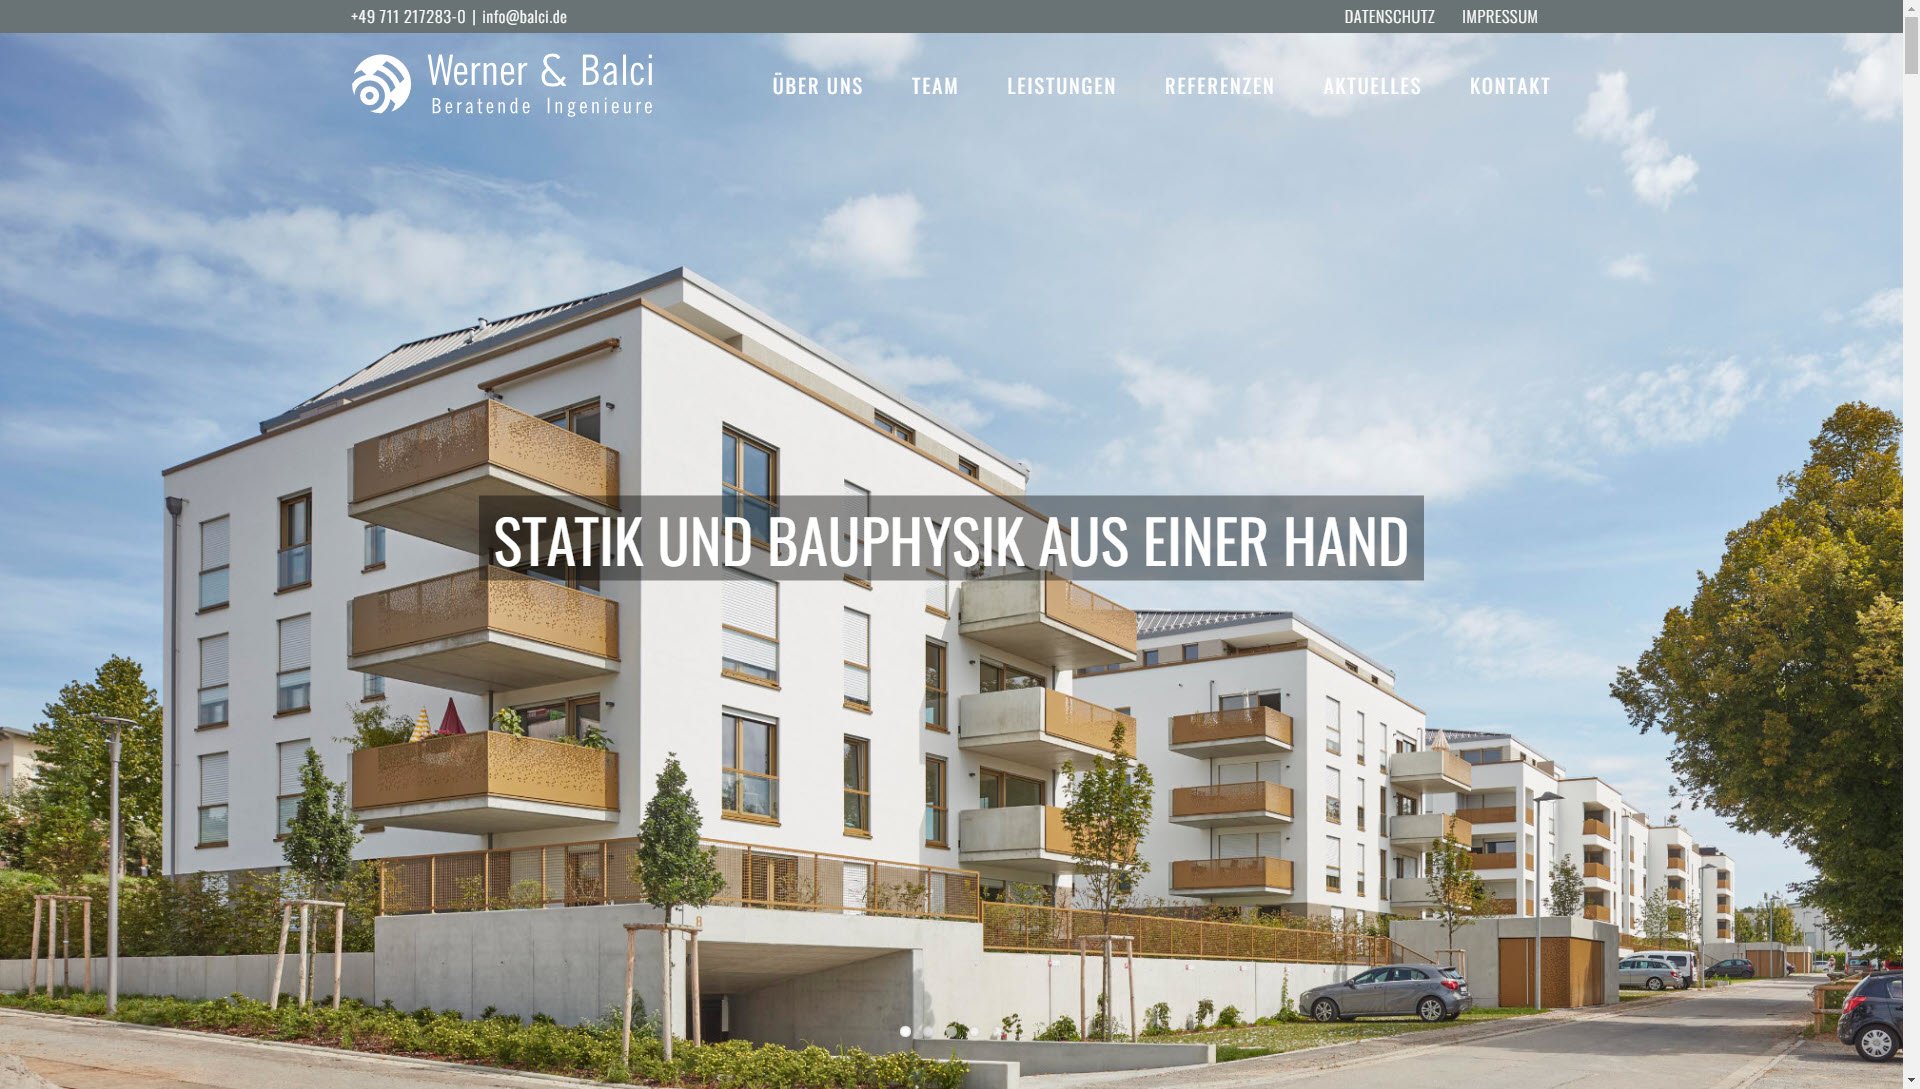 Werner & Balci GmbH